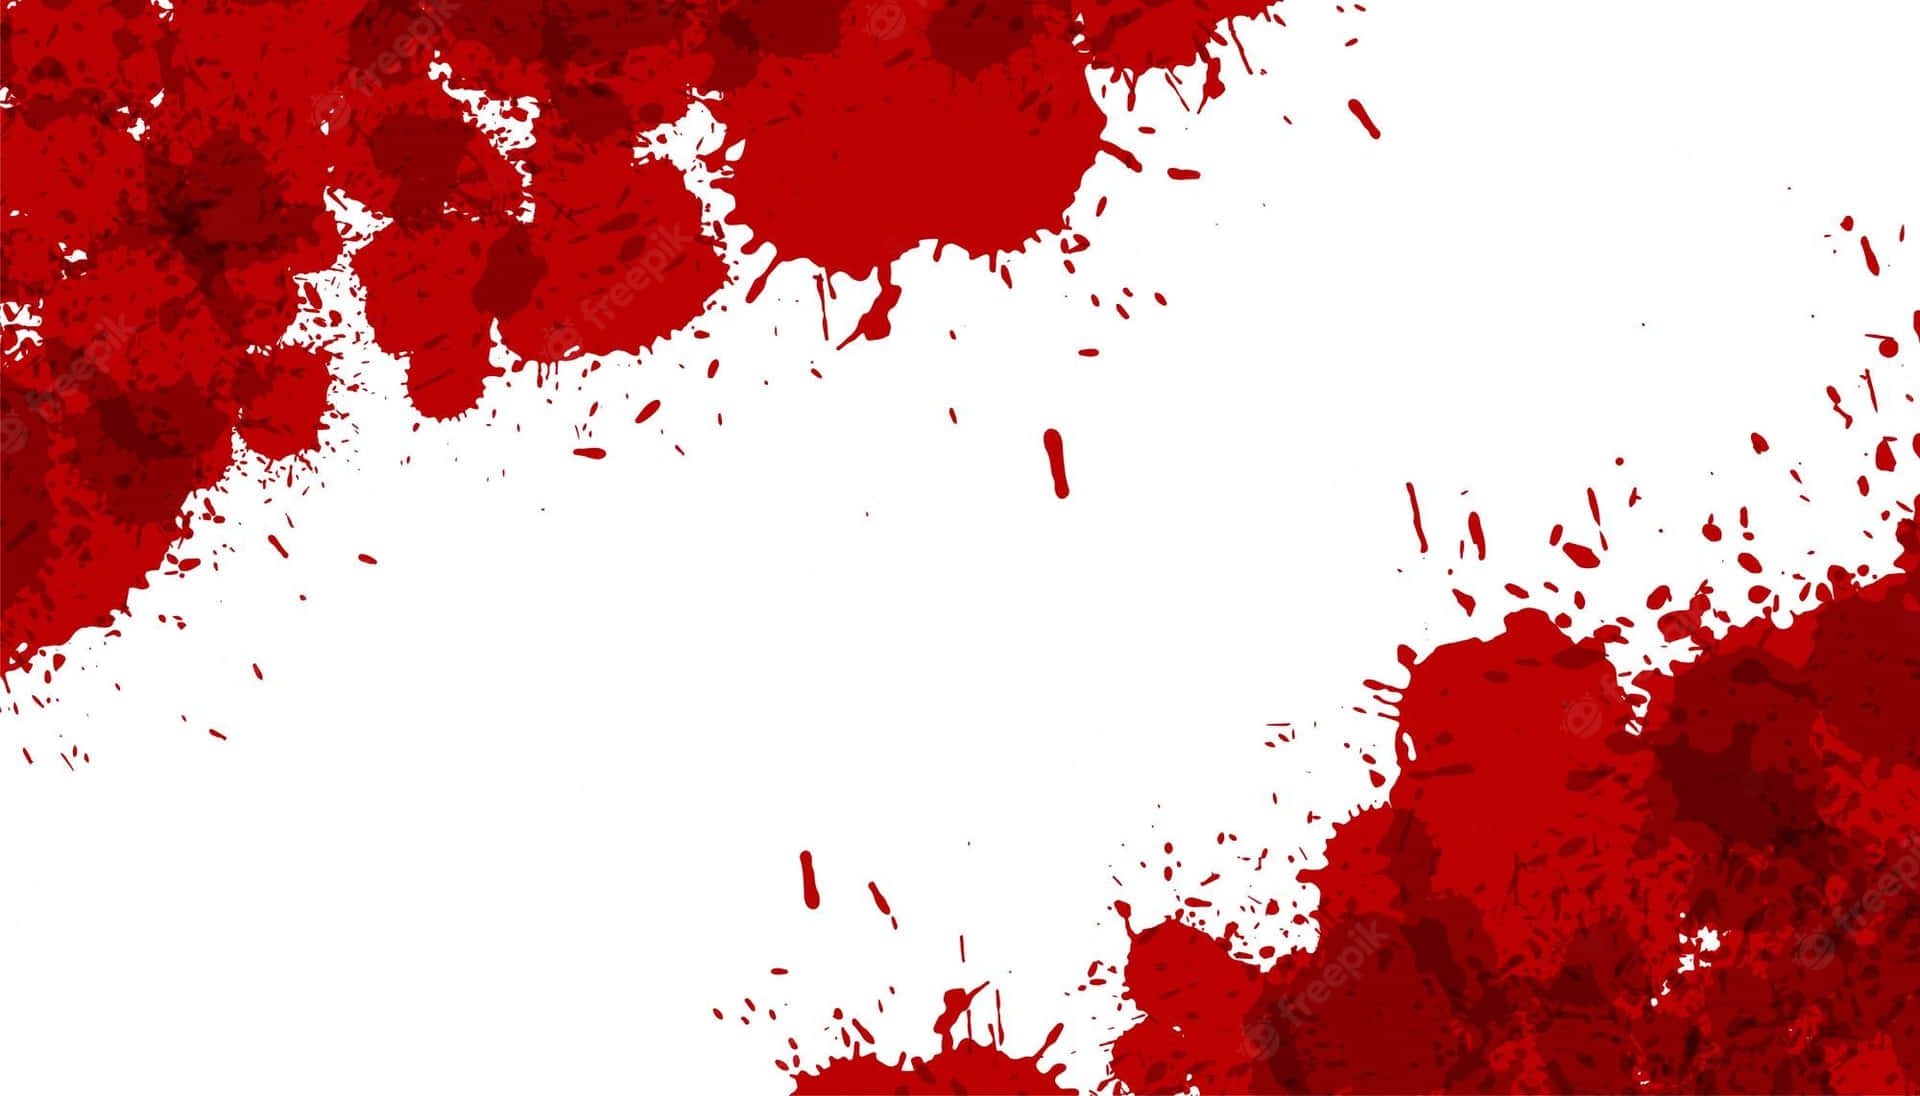 A red blood splatter on white background - Blood